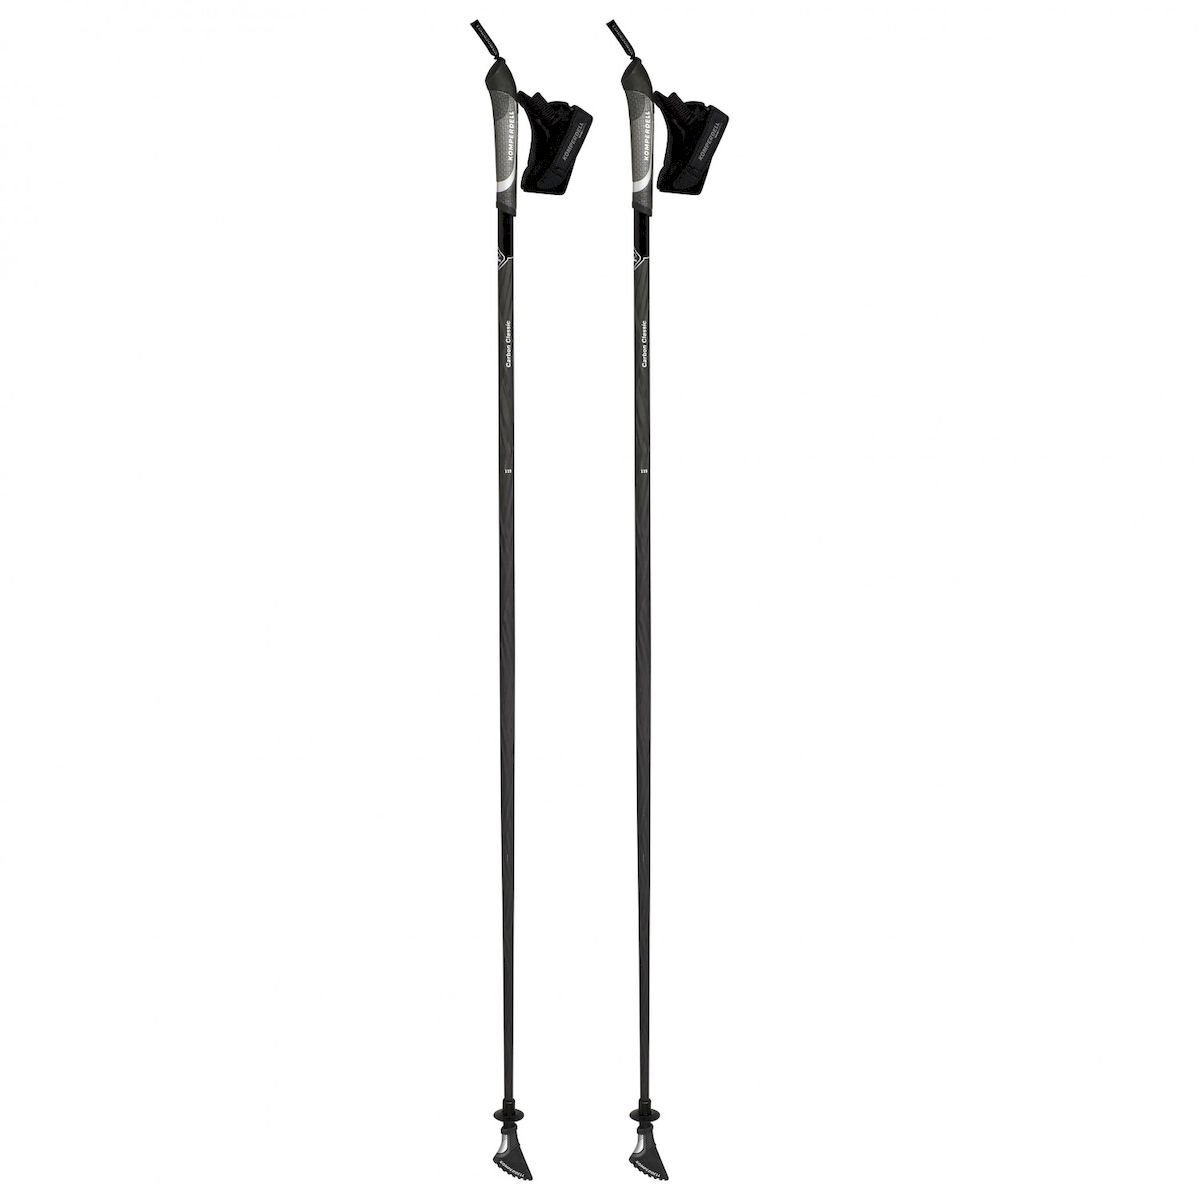 Komperdell Carbon Classic - Nordic walking poles